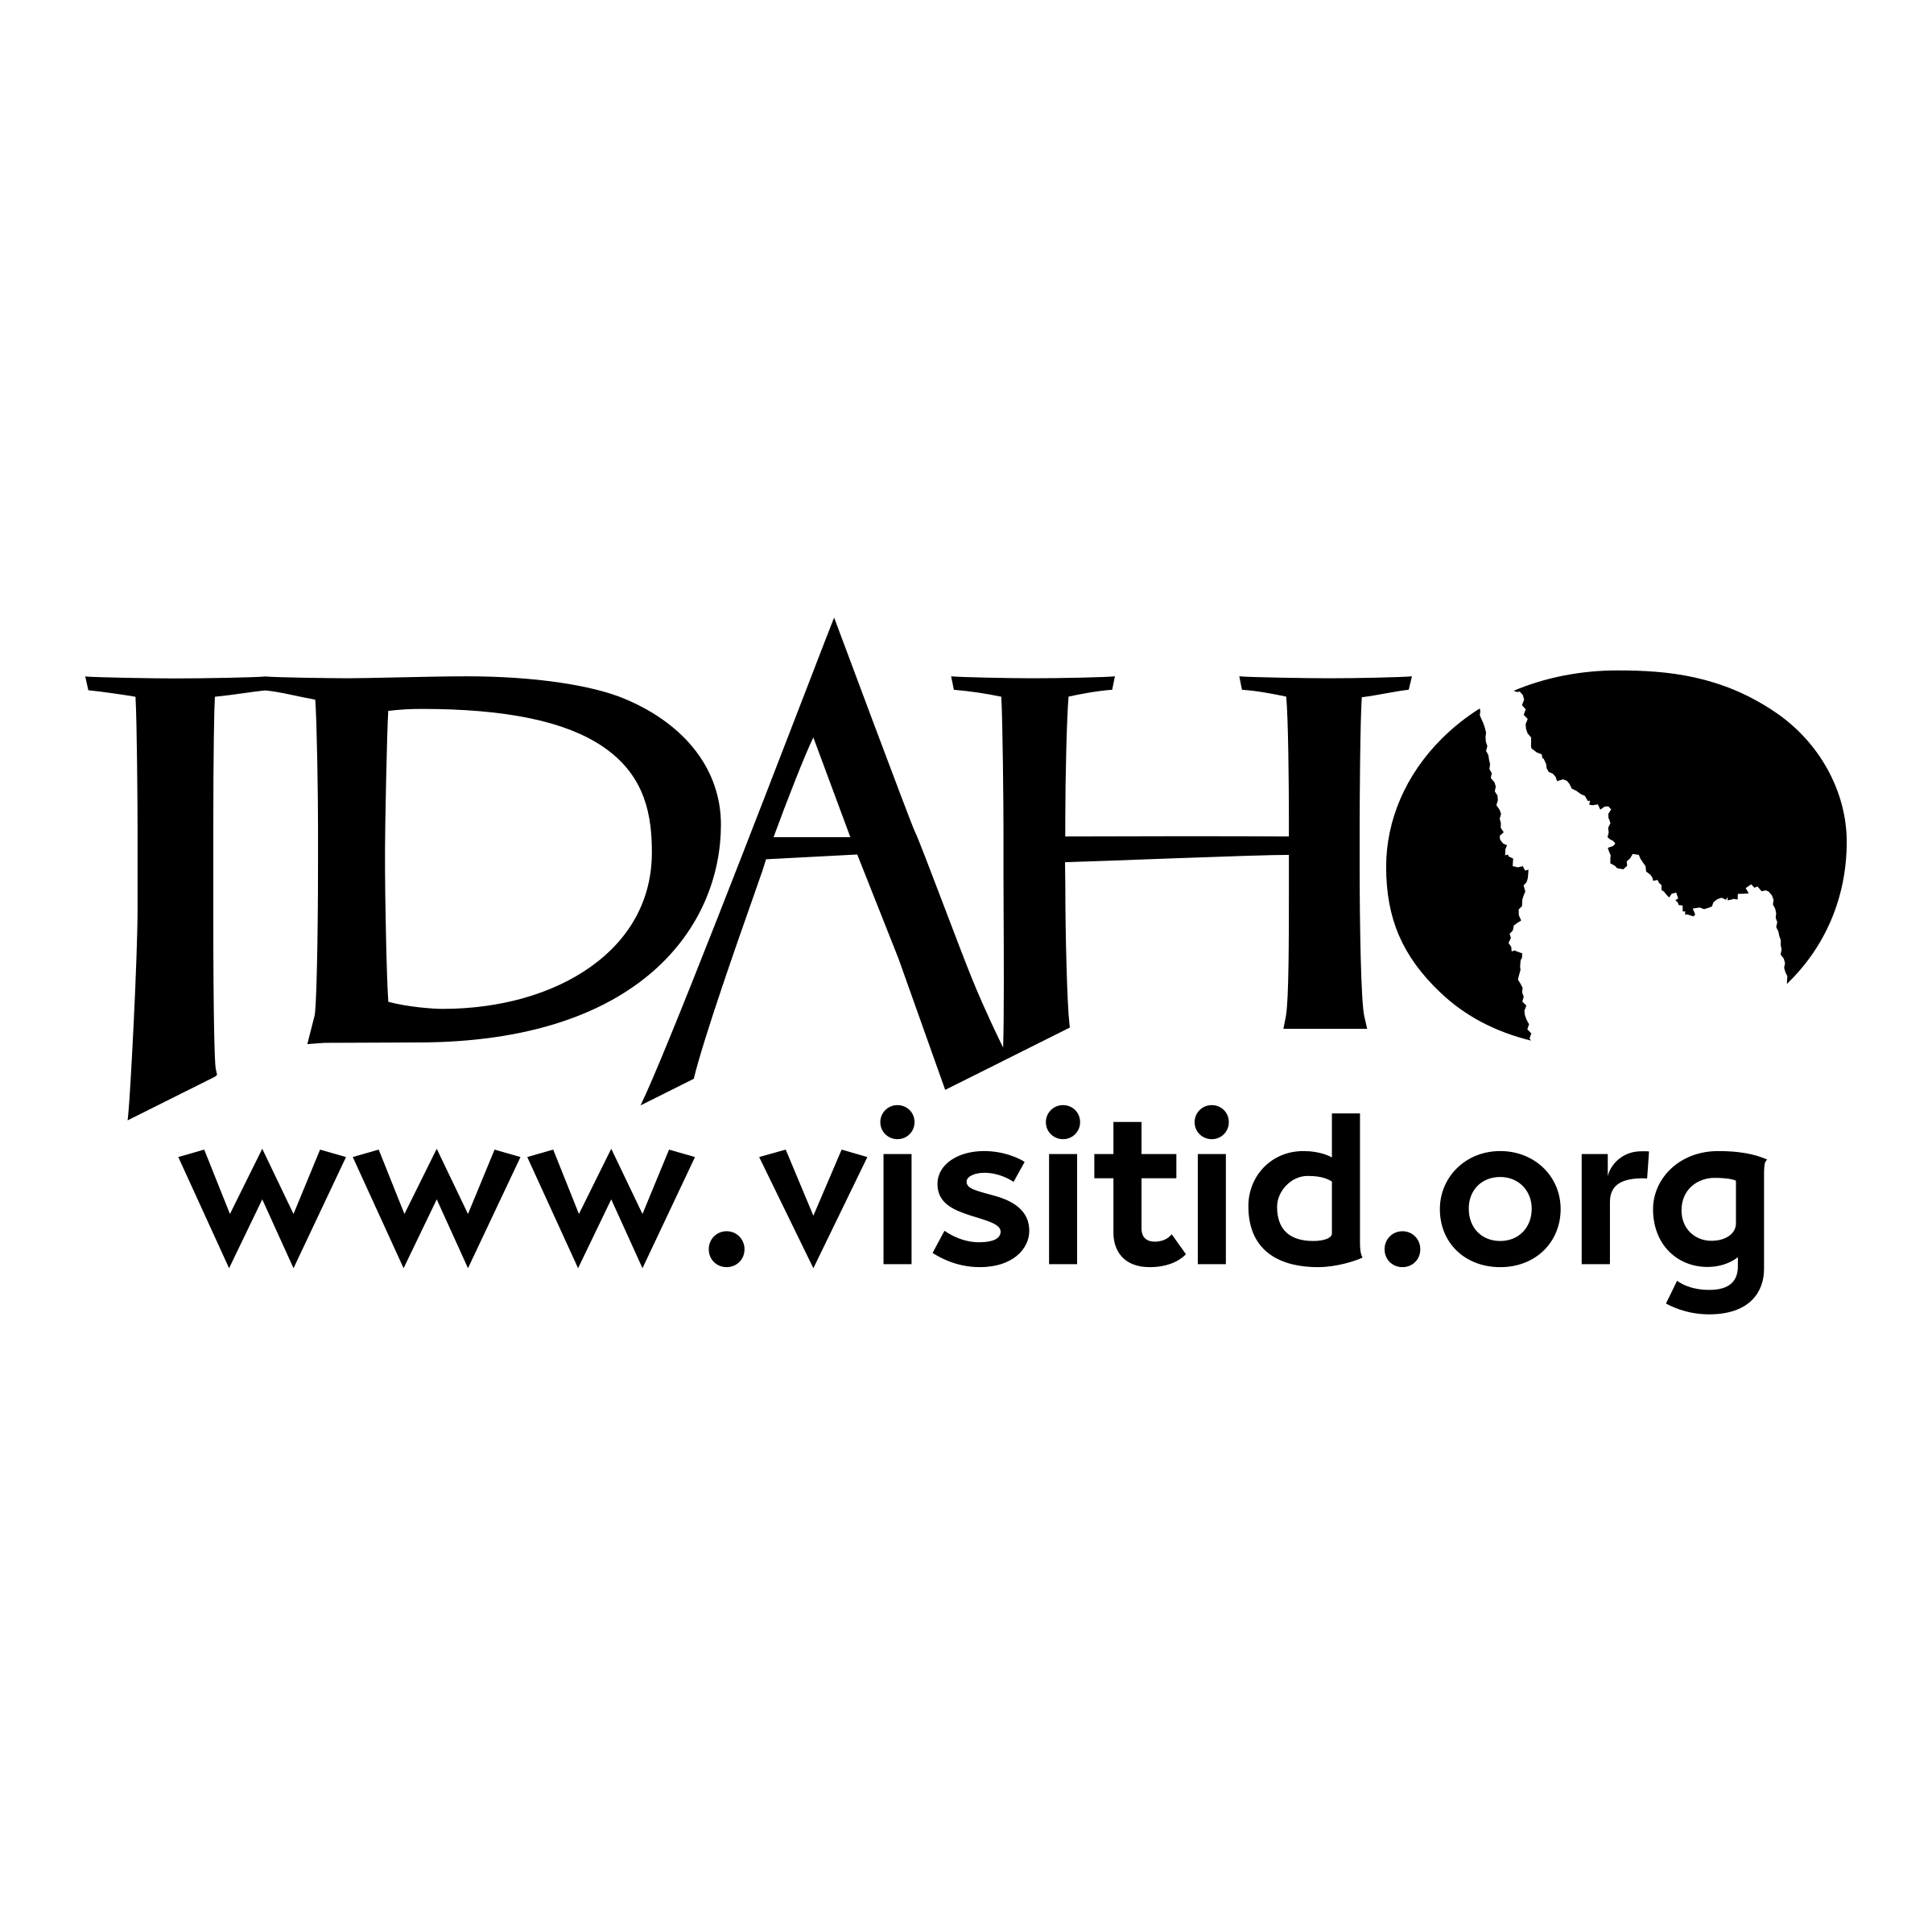 Idaho Logo - Idaho Logo PNG Transparent & SVG Vector - Freebie Supply